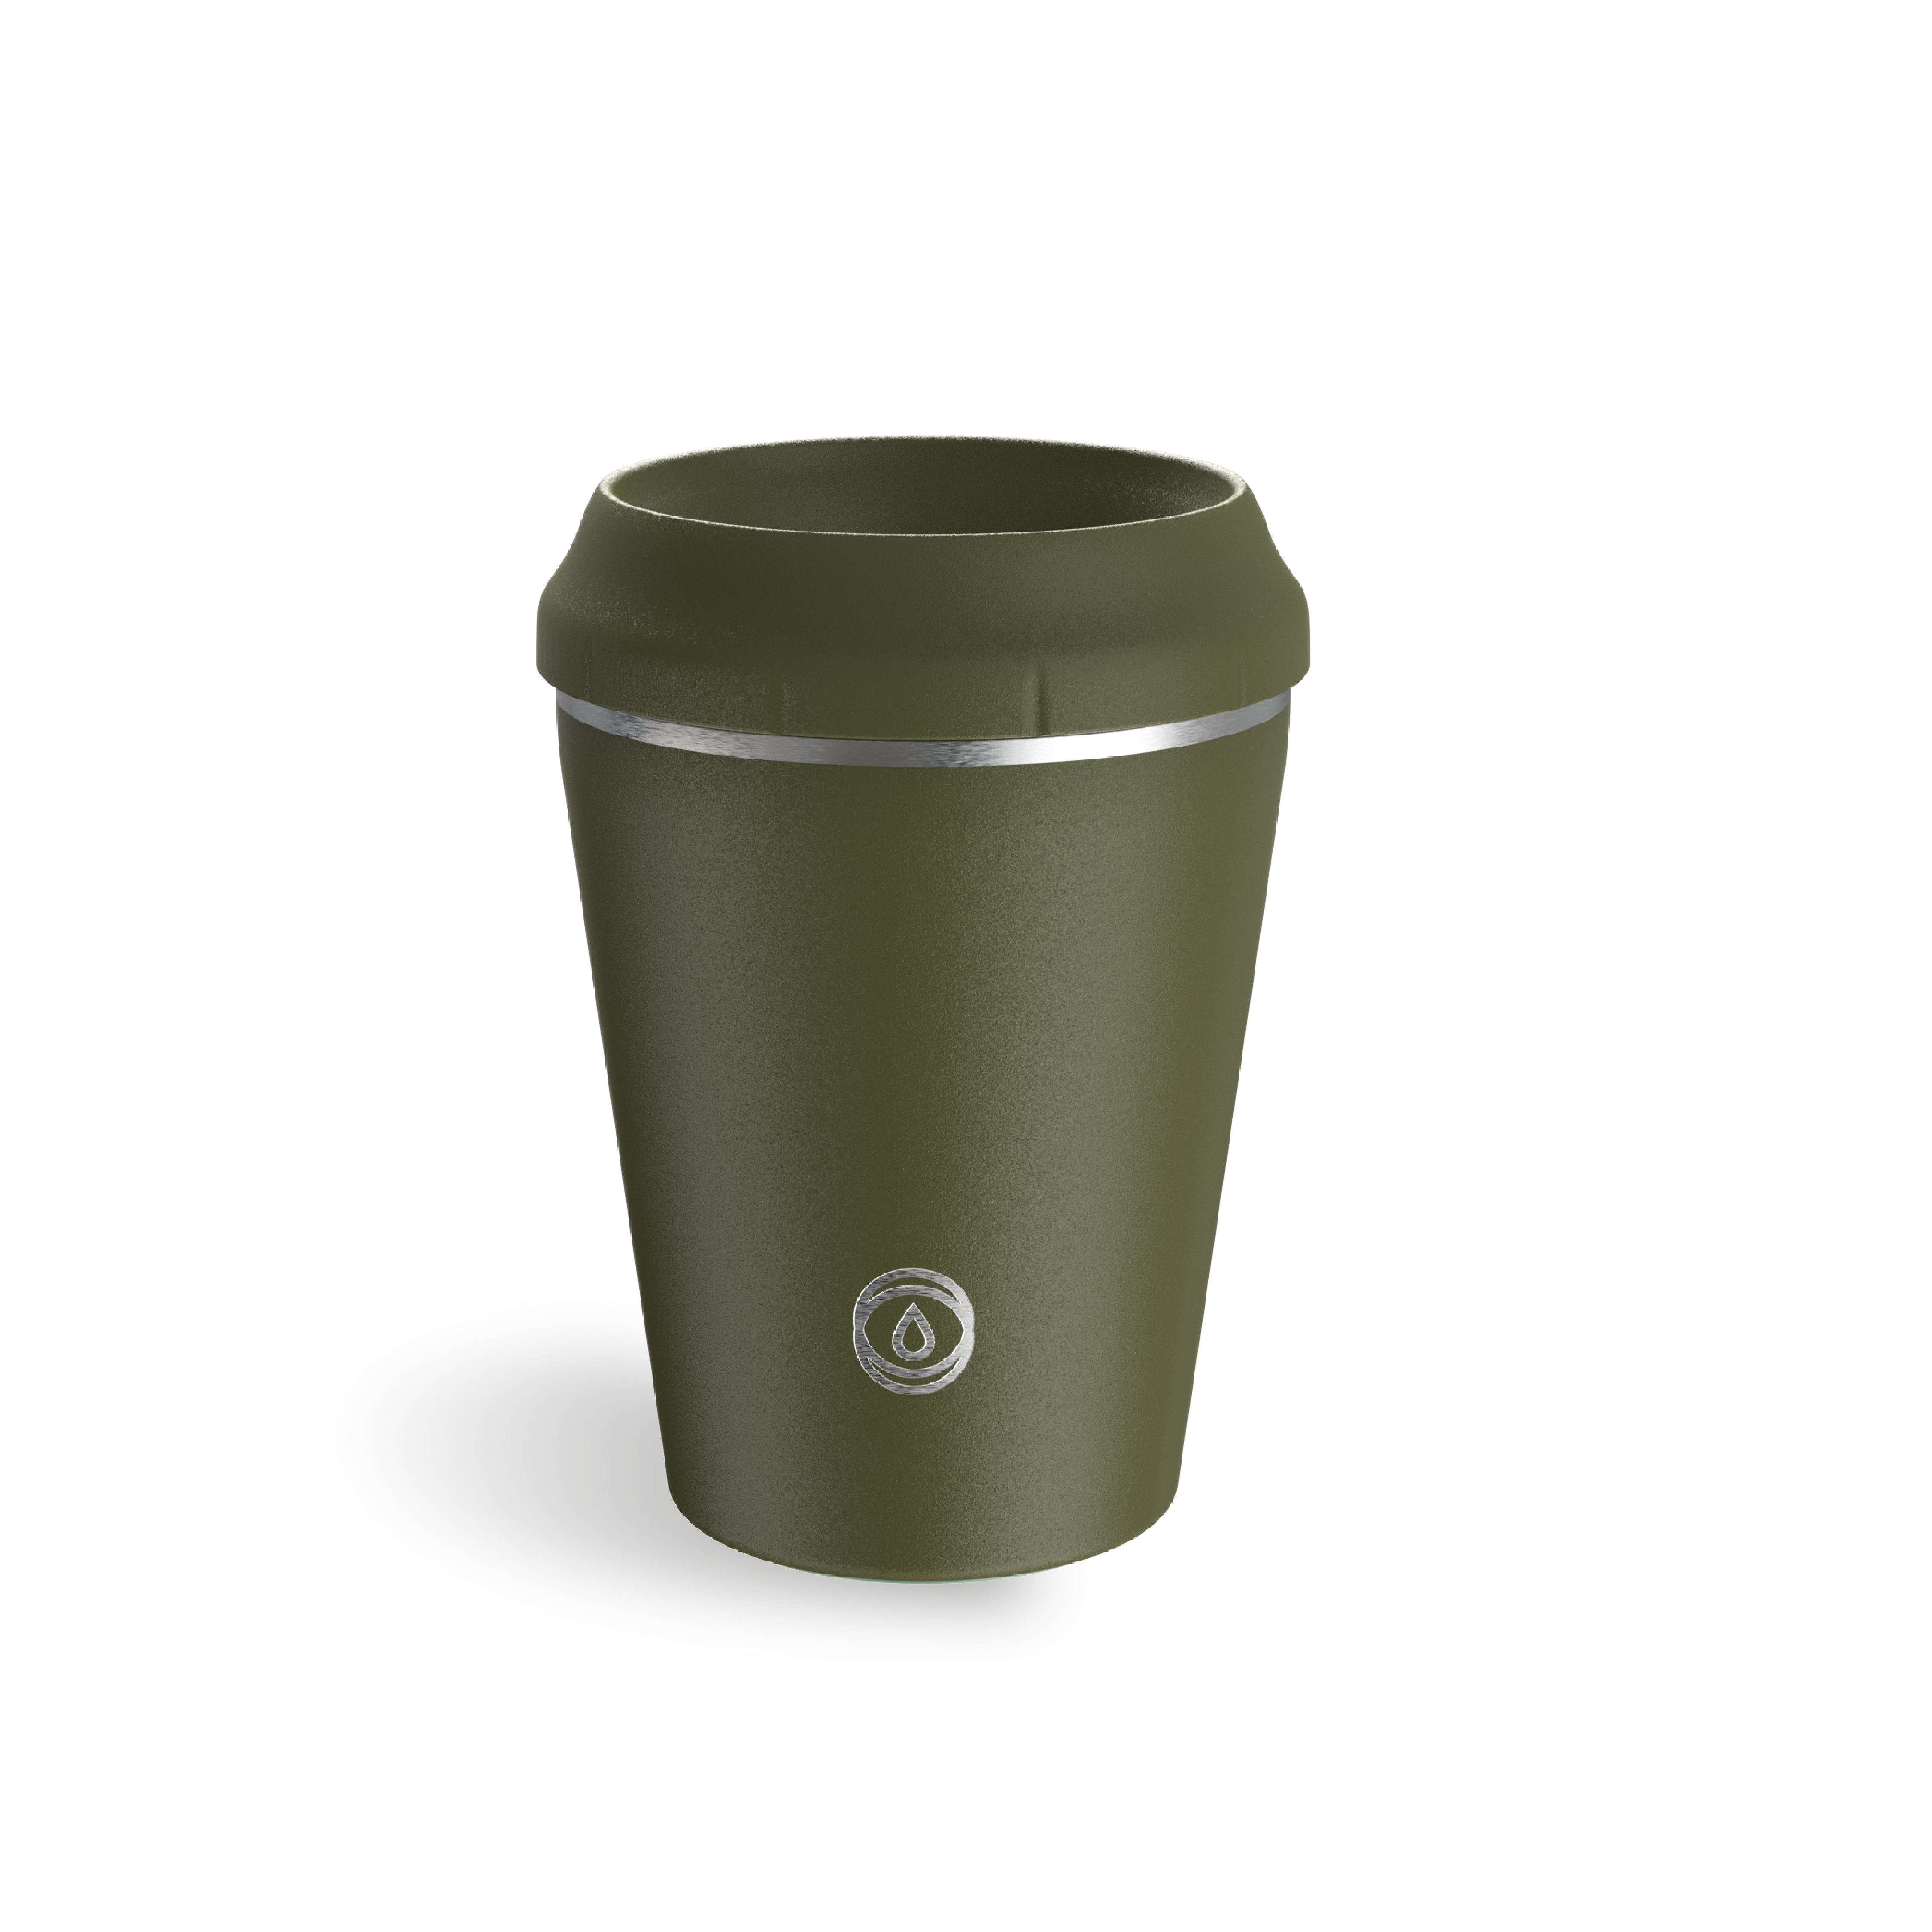 Sandpiper-Bulk Custom 16oz reusable tumbler coffee cup with lid